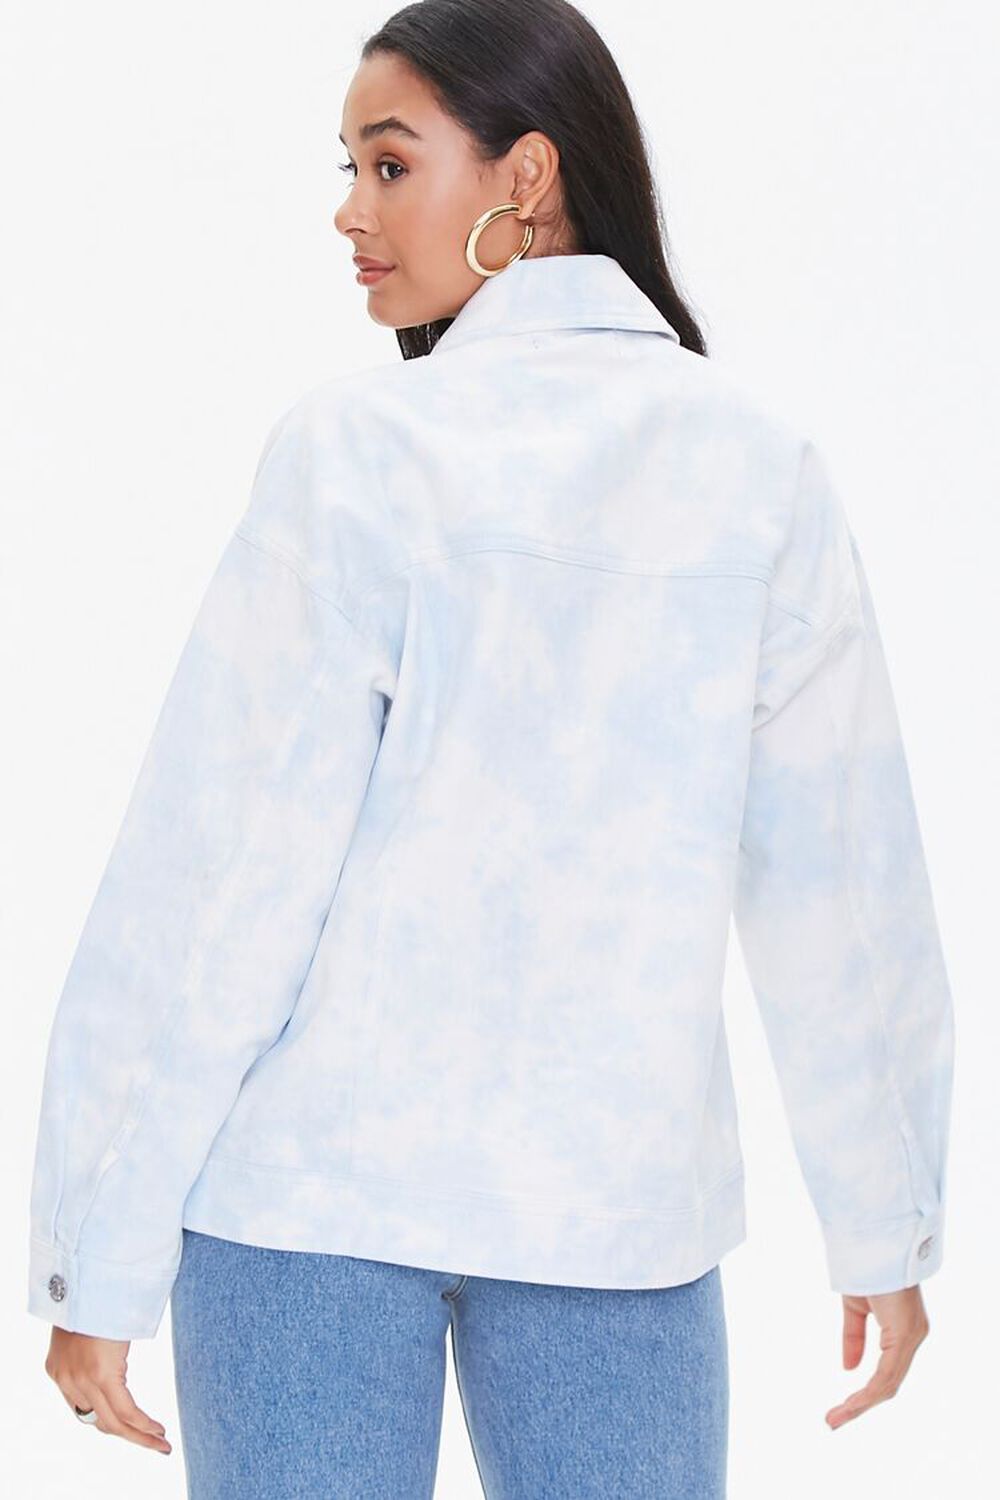 BLUE/WHITE Cloud Wash Denim Jacket, image 3